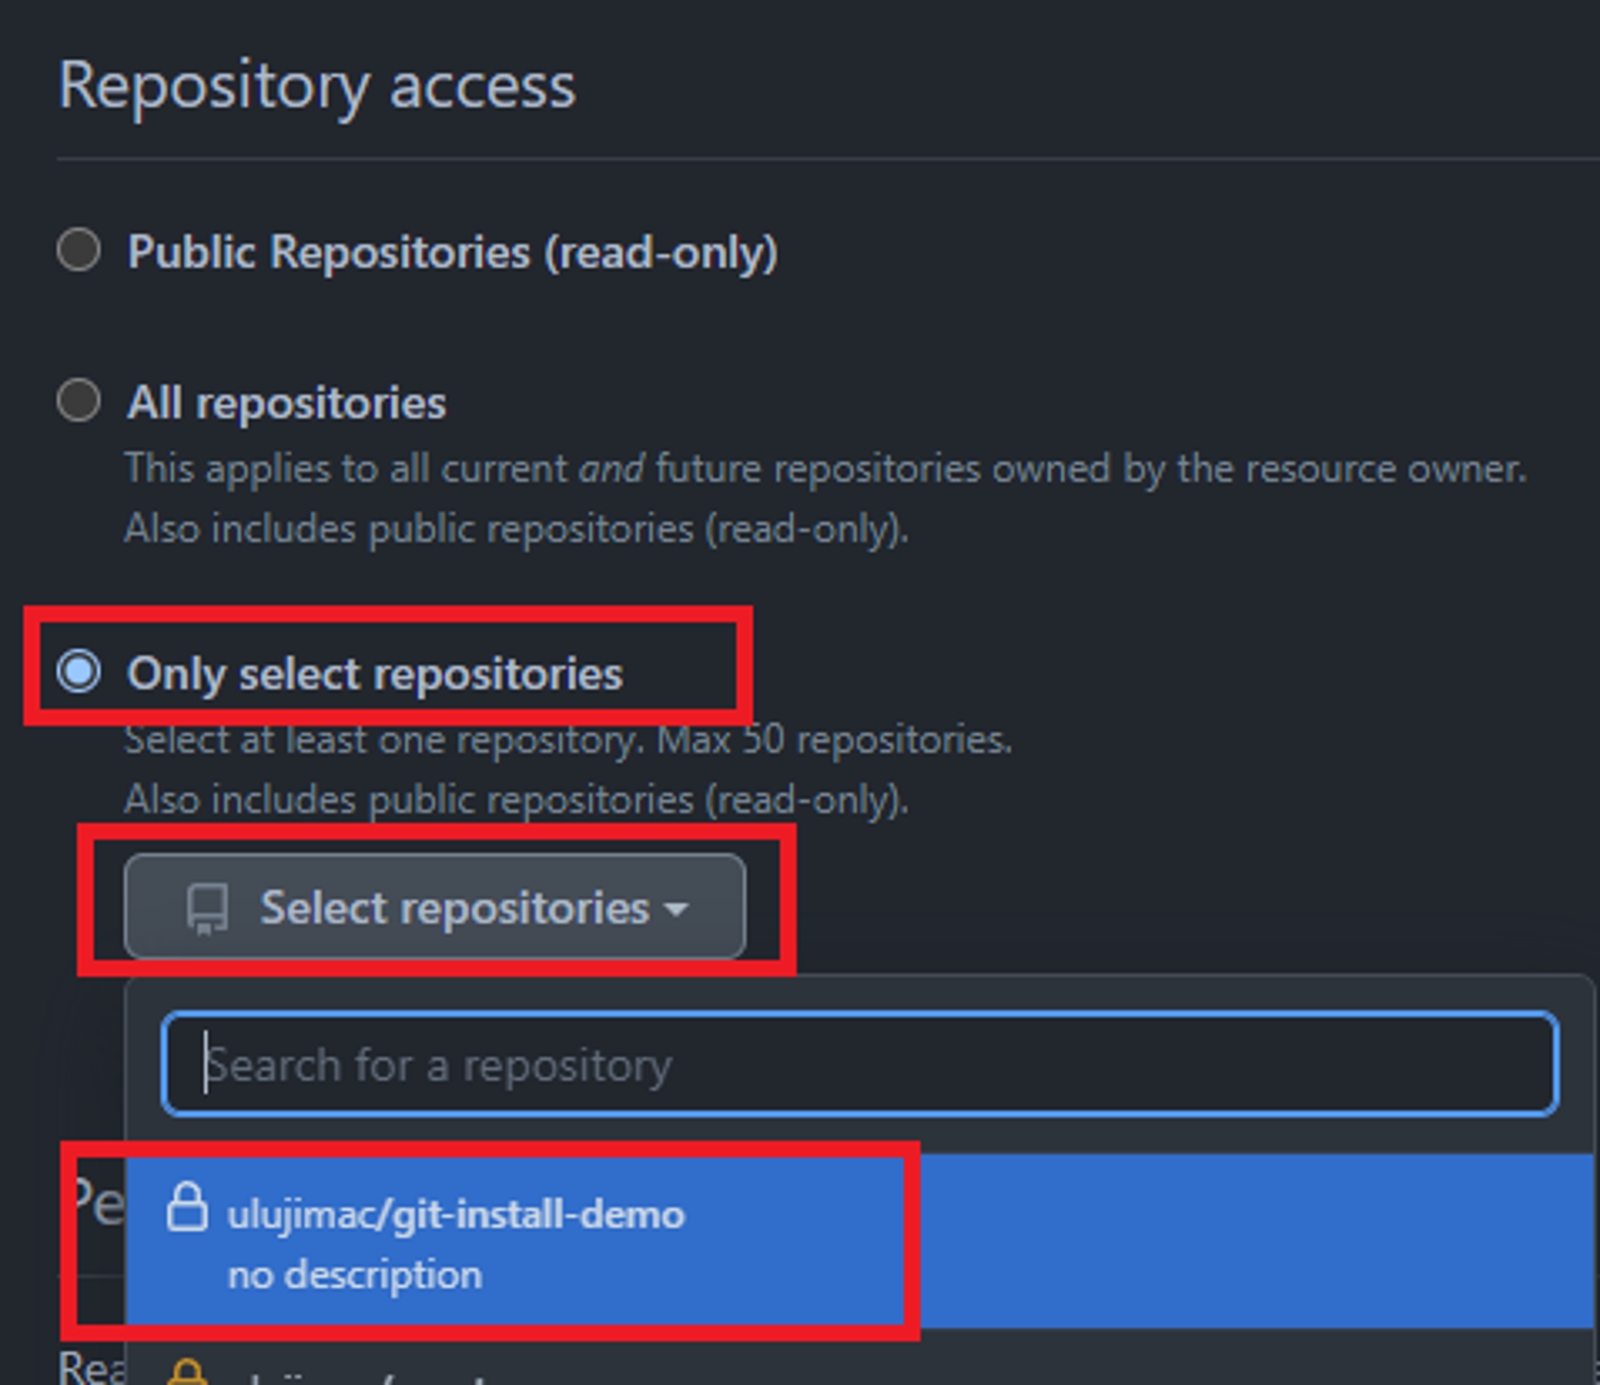 Repository access